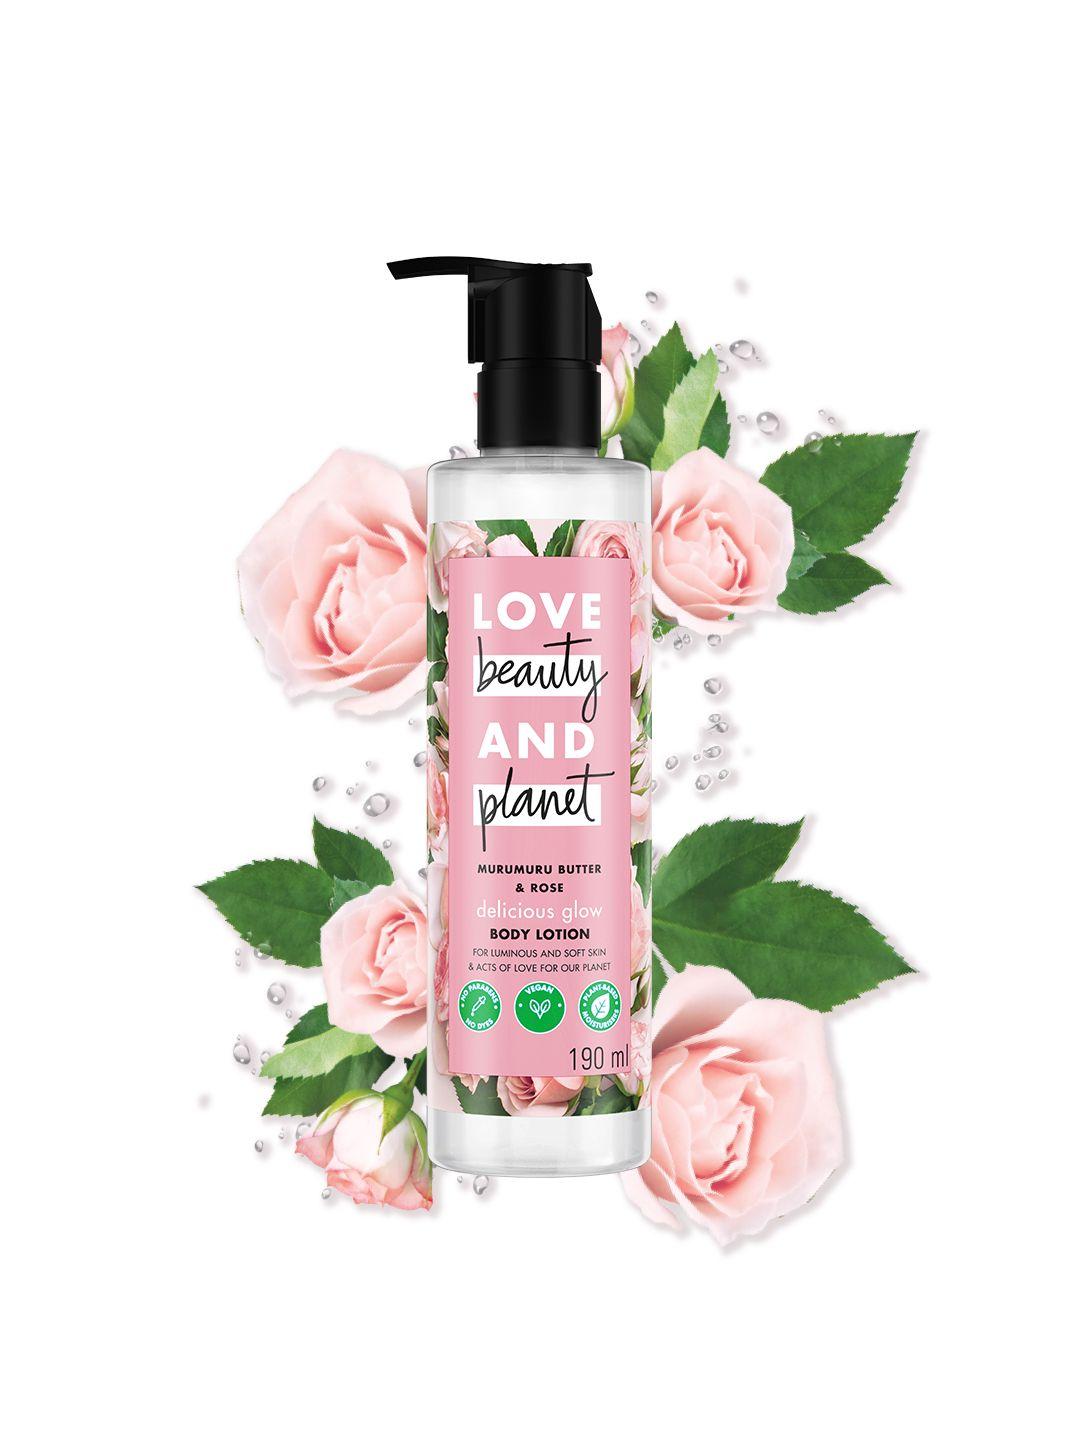 love beauty & planet murumuru butter & rose moisturizing body lotion - 190 ml